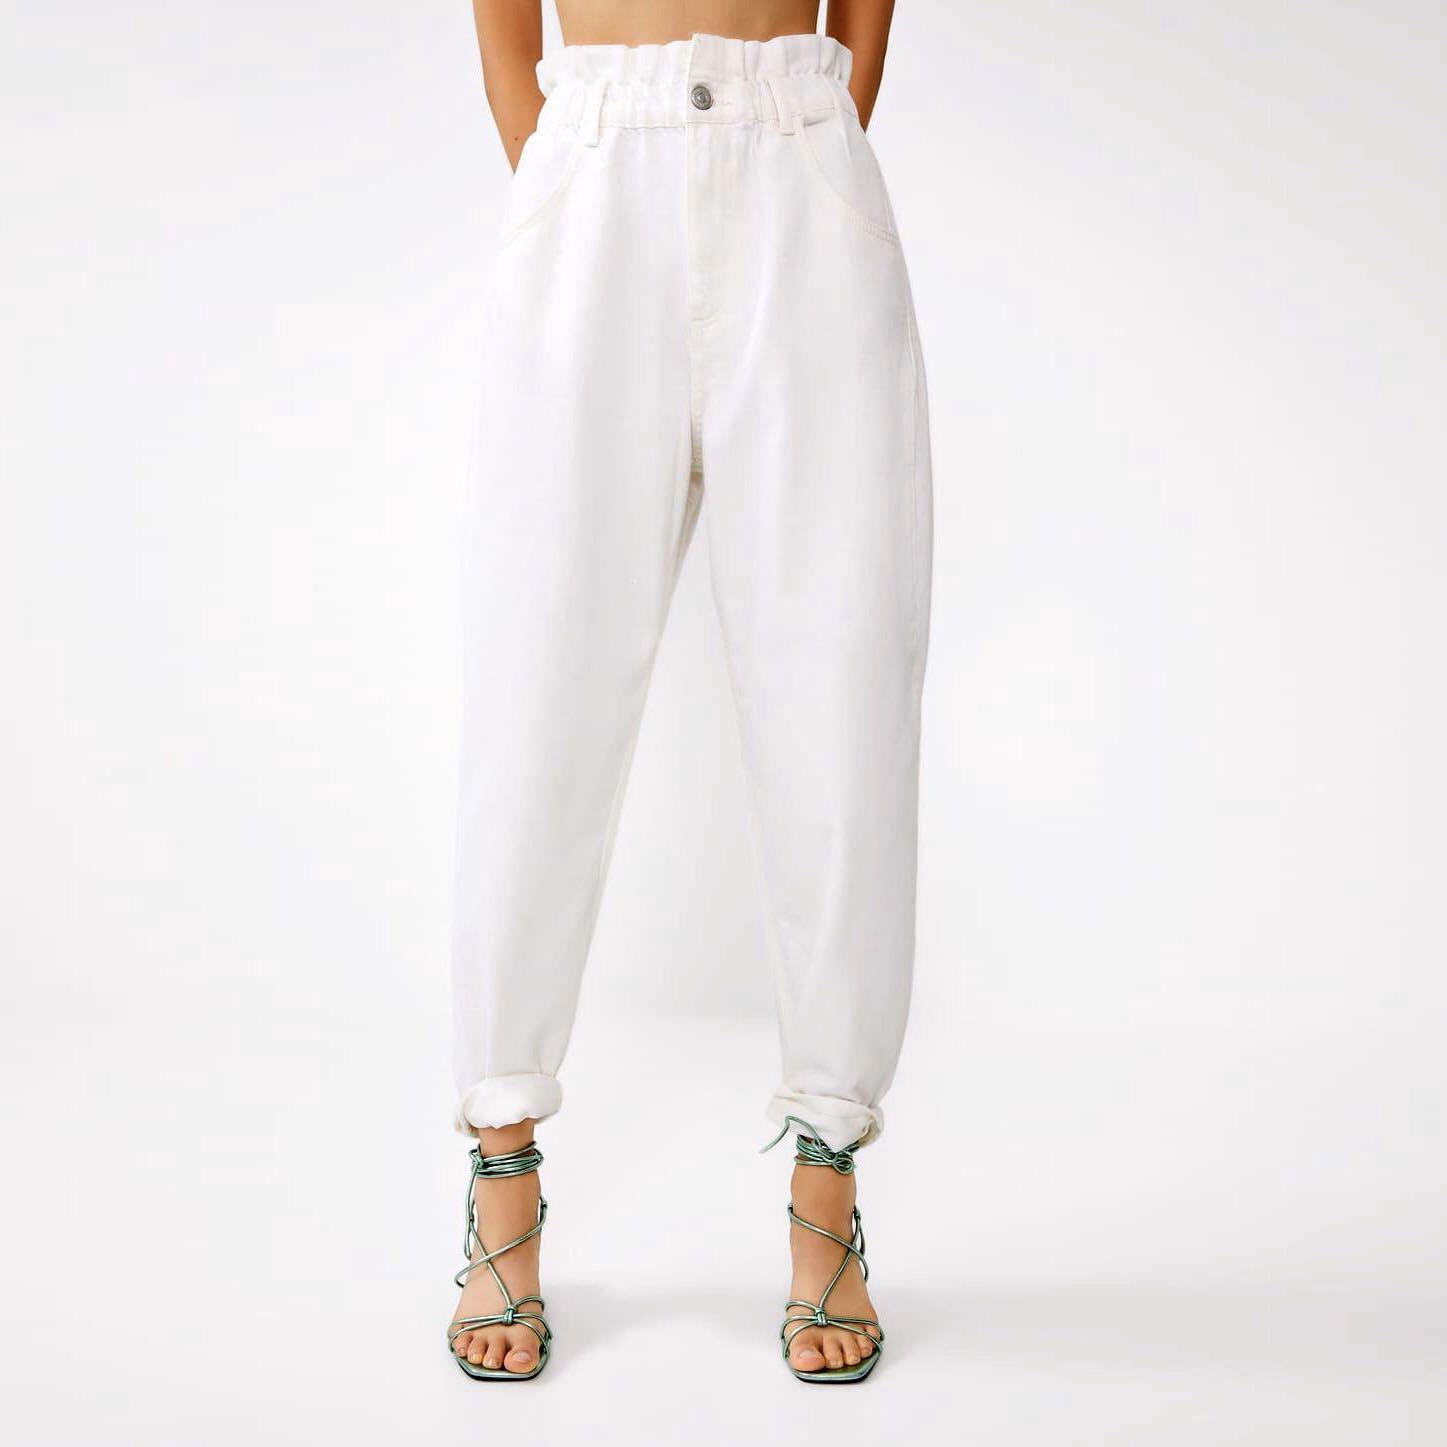 Zara White Denim Slouchy Paperbag Jeans 